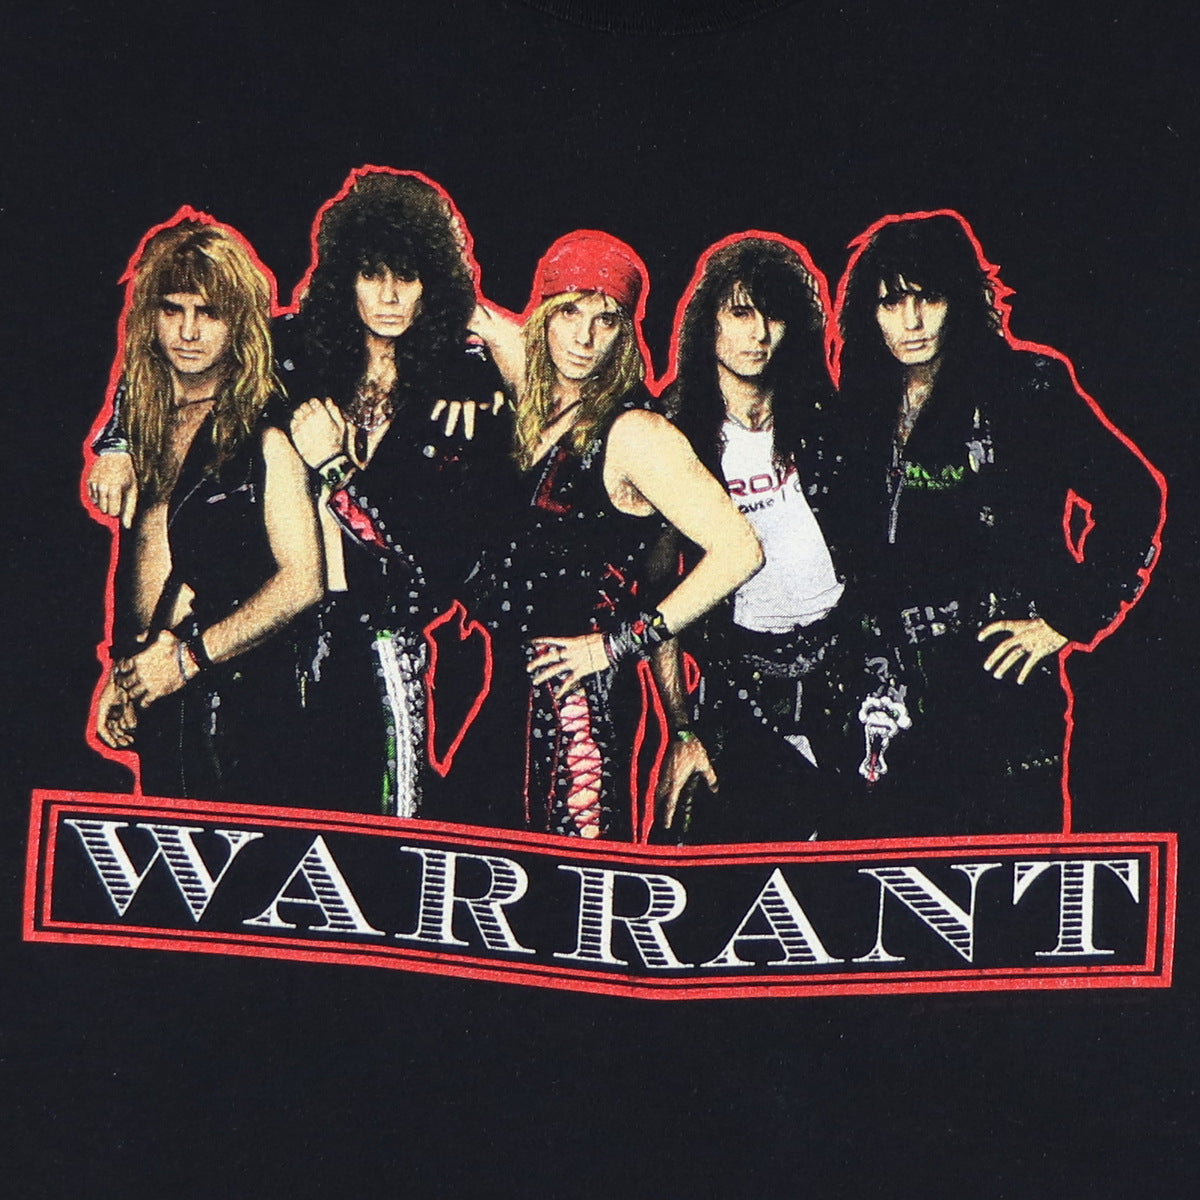 1989 Warrant Shirt